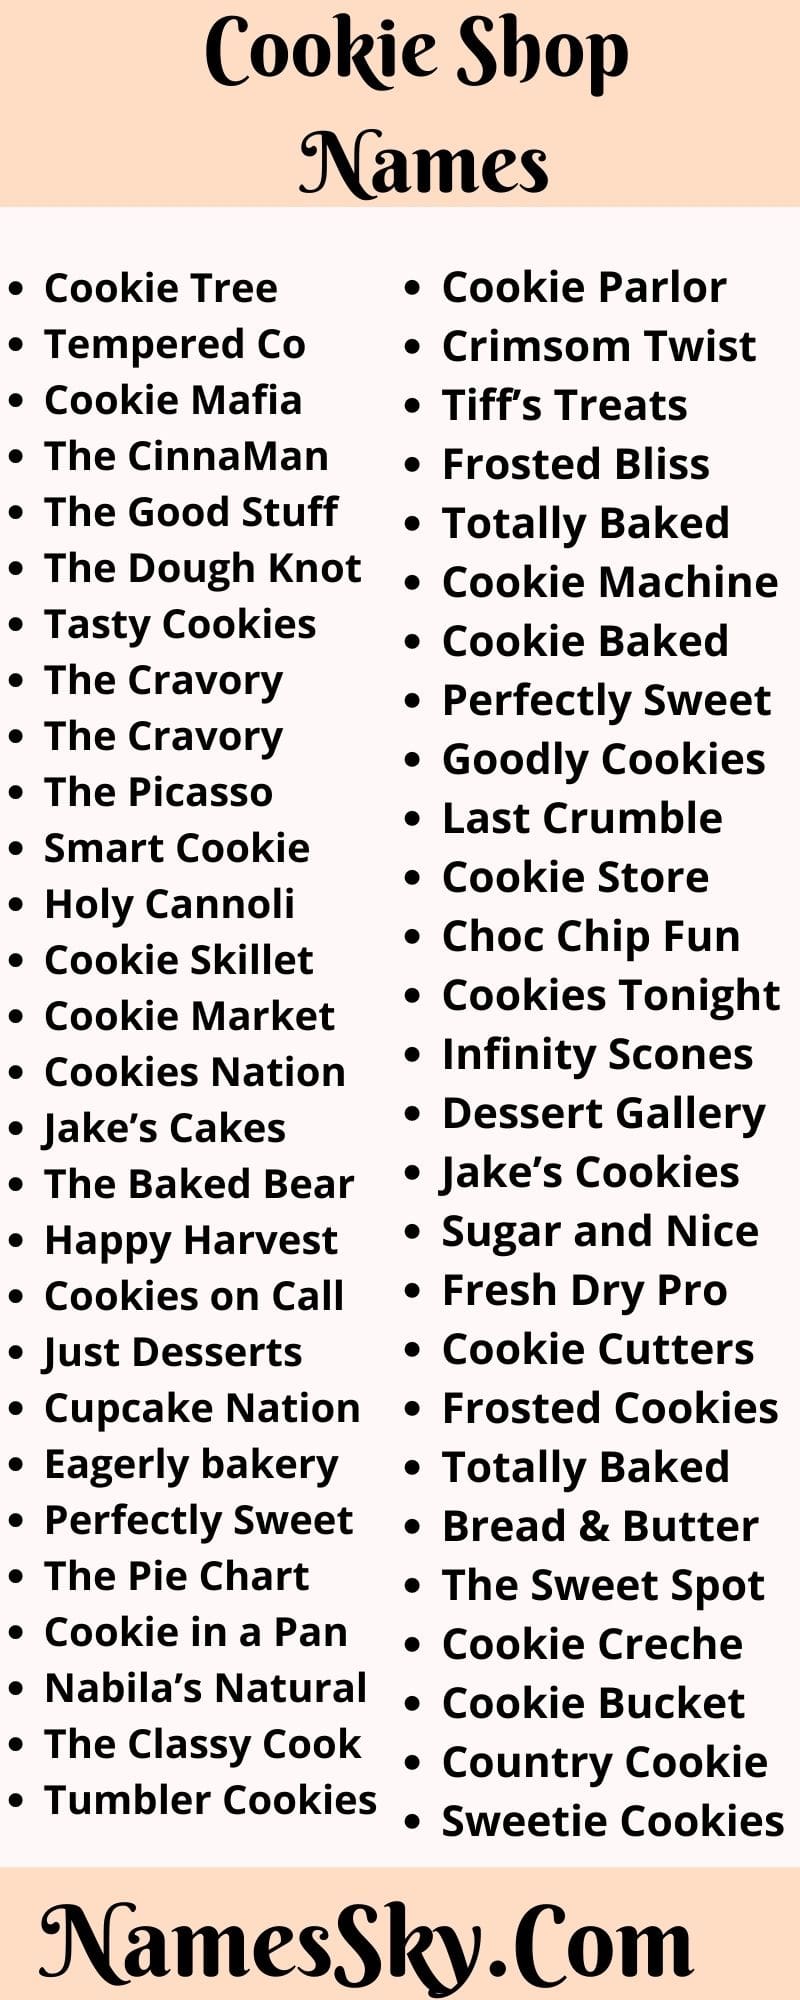 Cookie Shop Names